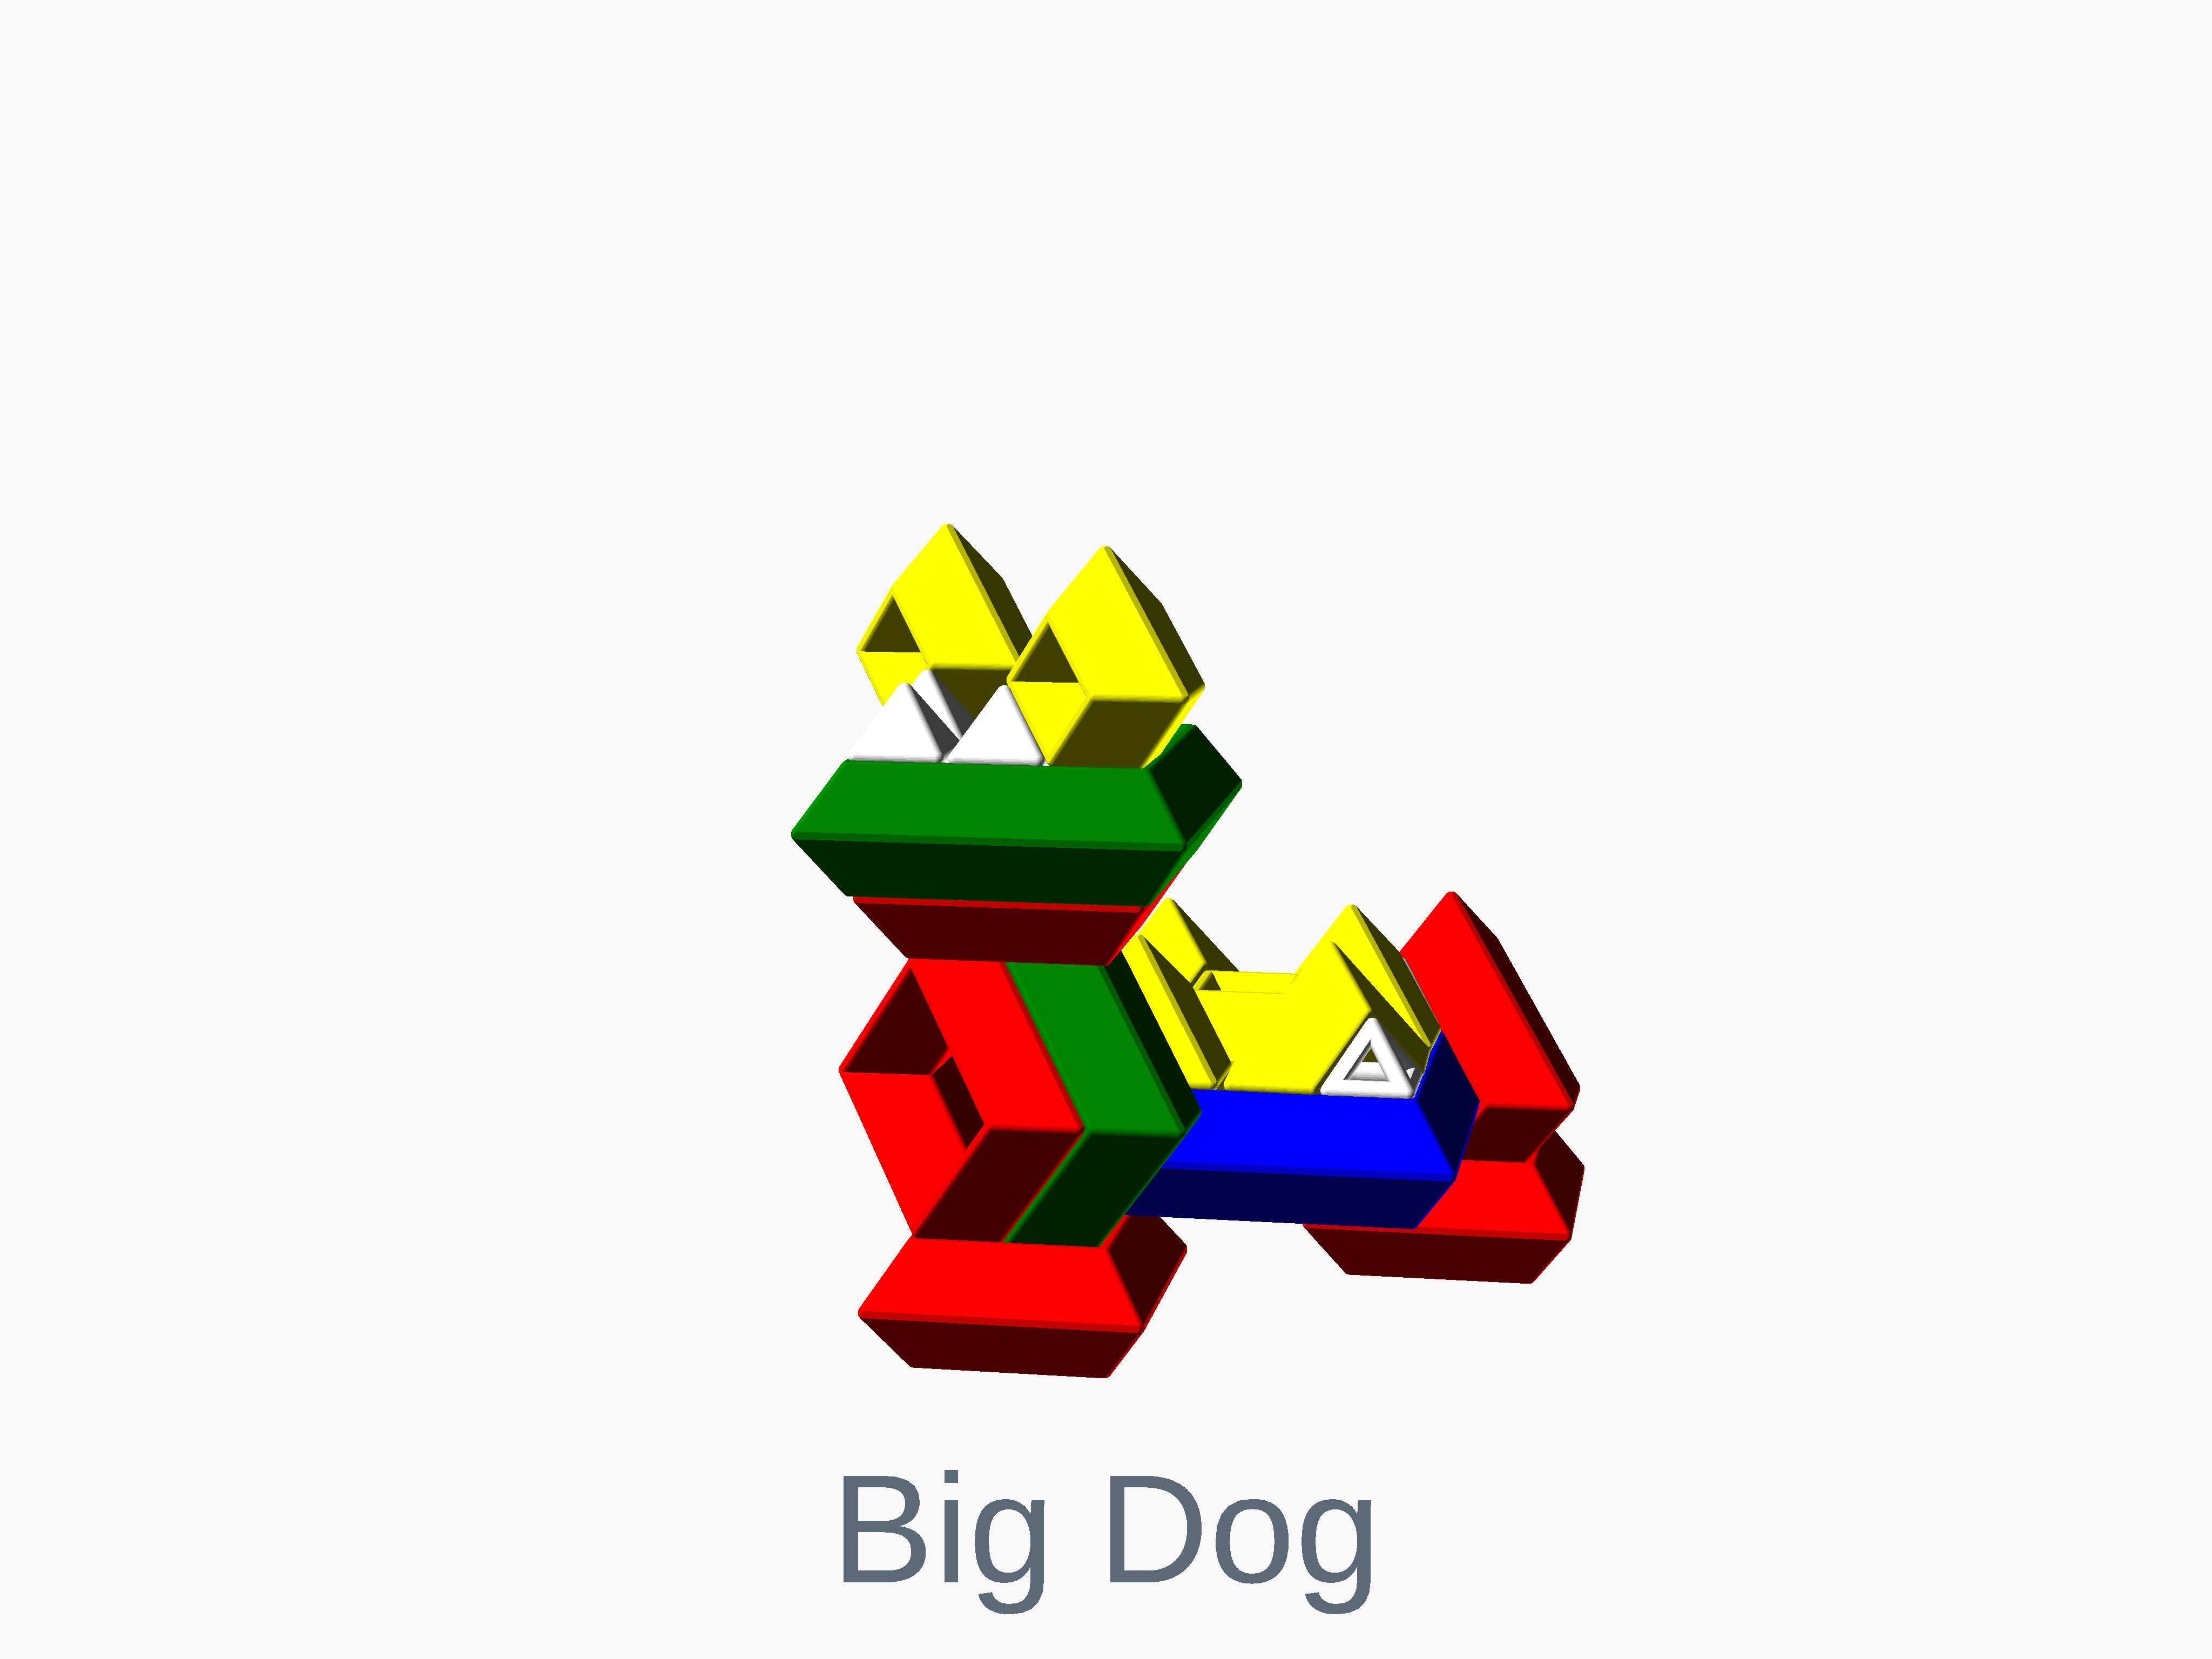 Octahedron bigdog